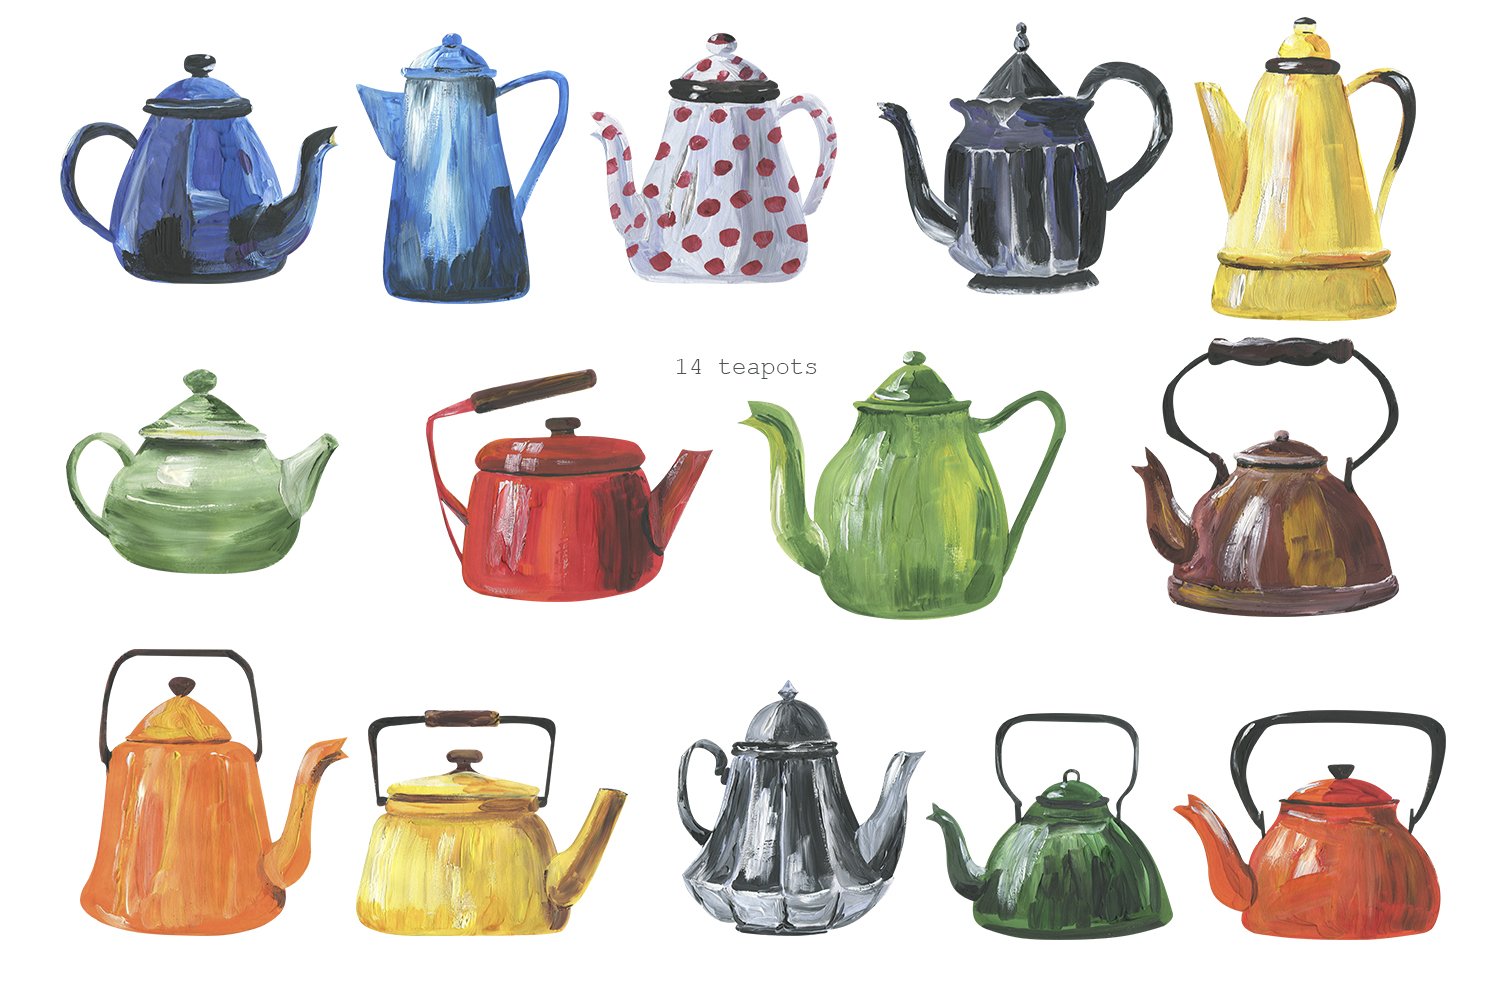 Diverse of colorful teapots.